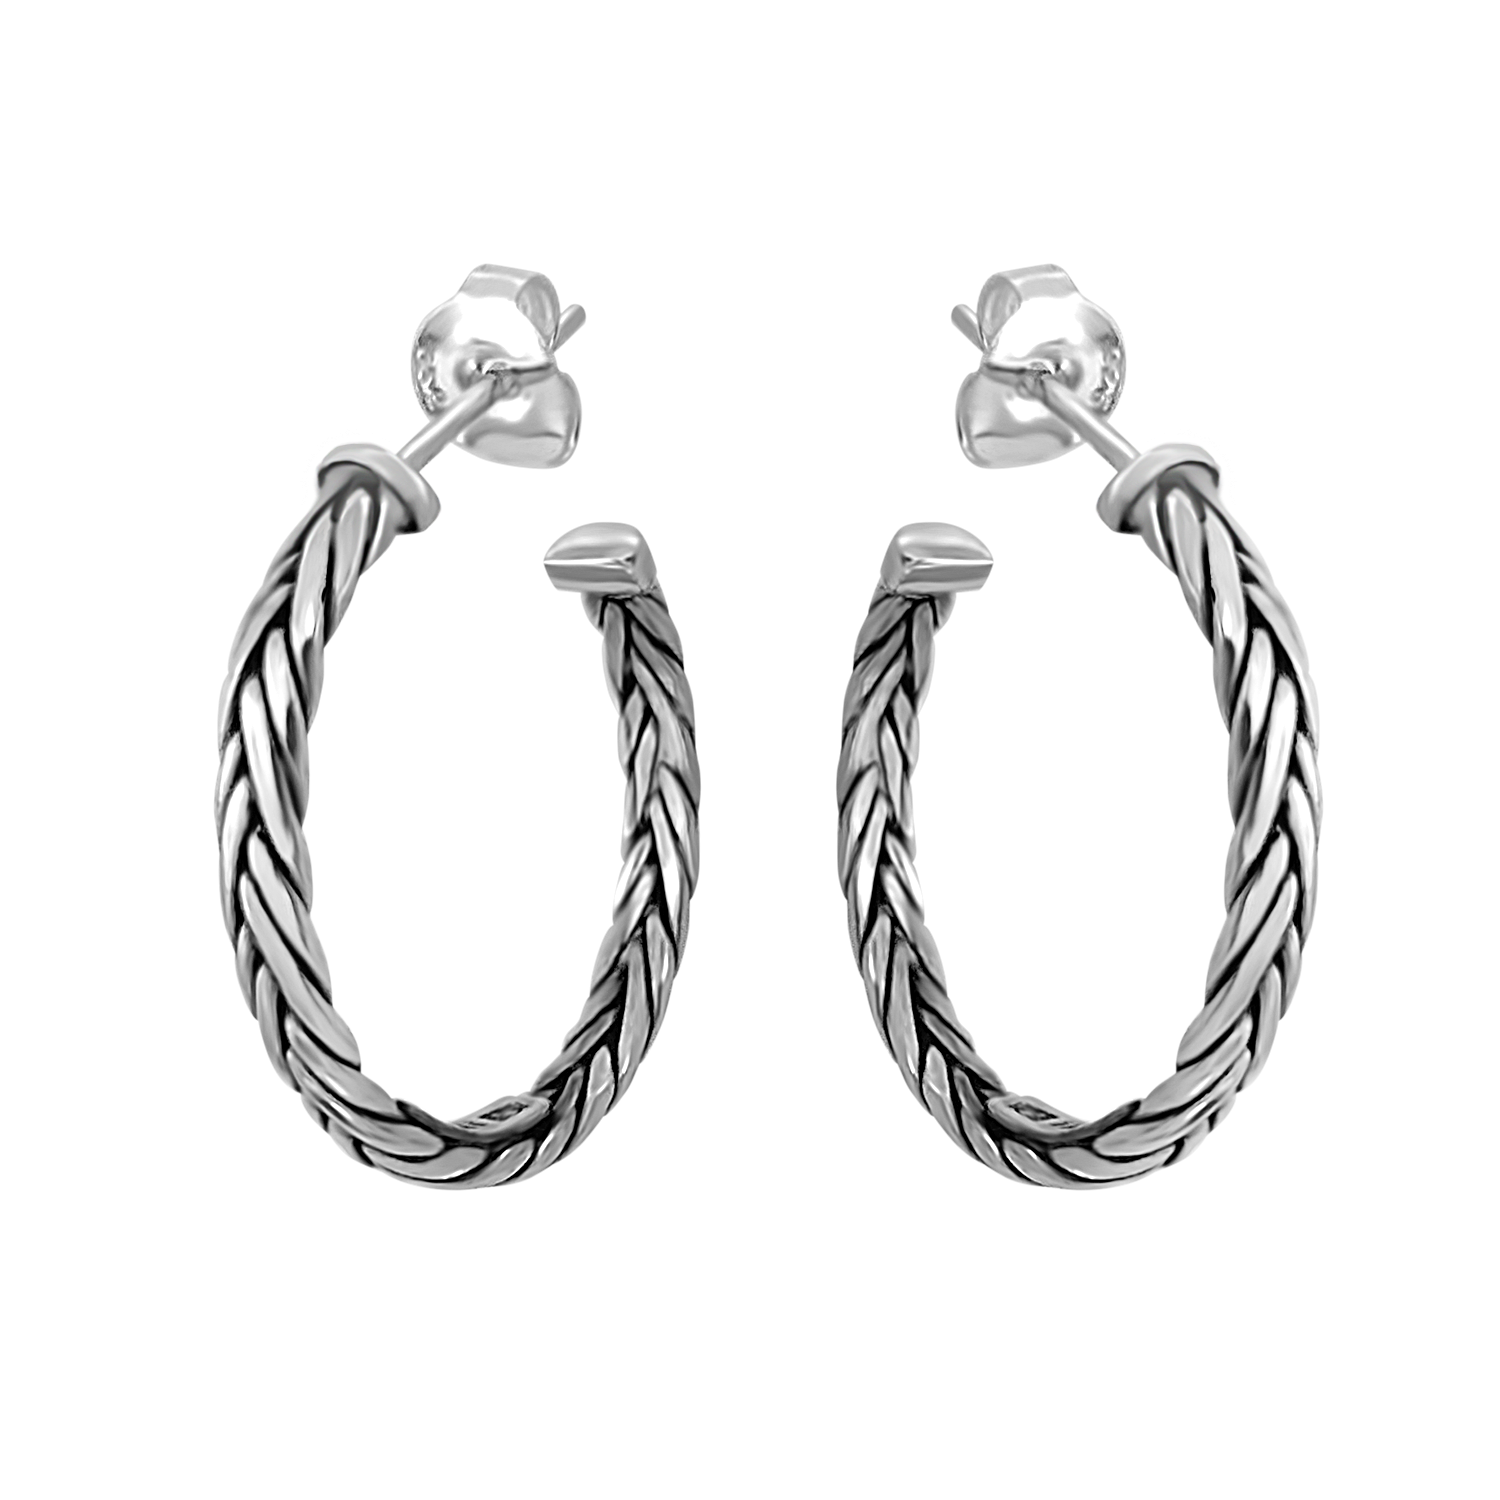 sterling silver hoop earrings braided style butterfly closure kemmi jewelry bohemian handmade